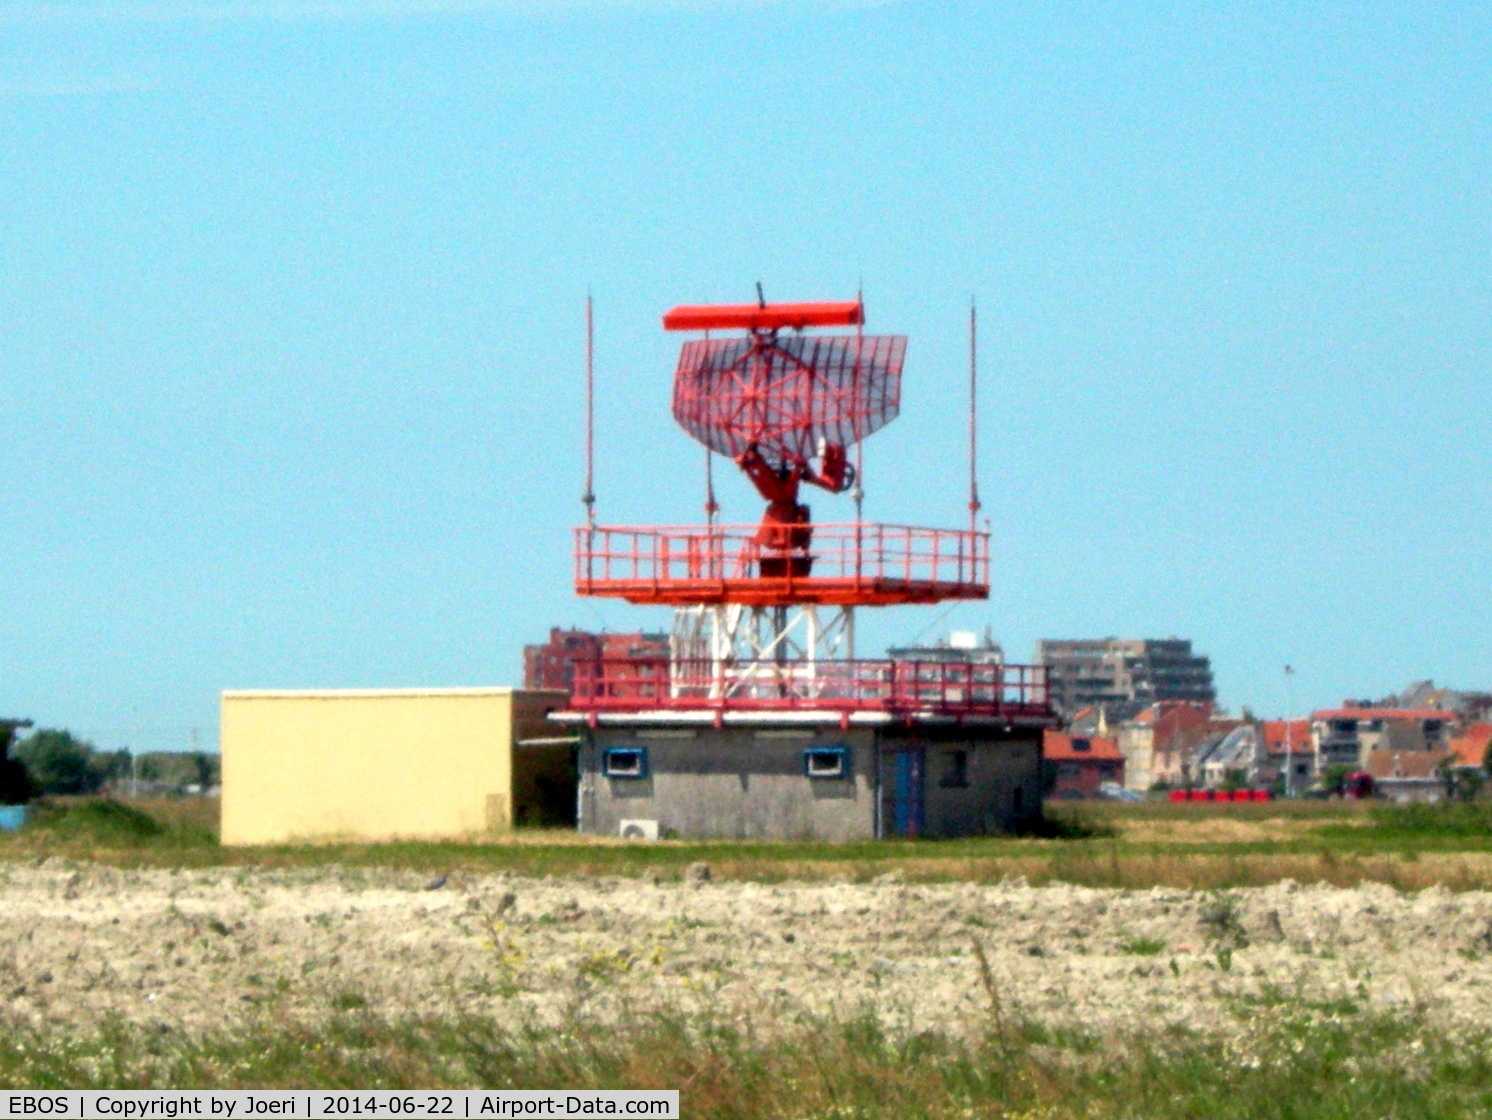 Ostend-Bruges International Airport, Ostend Belgium (EBOS) - Radartower